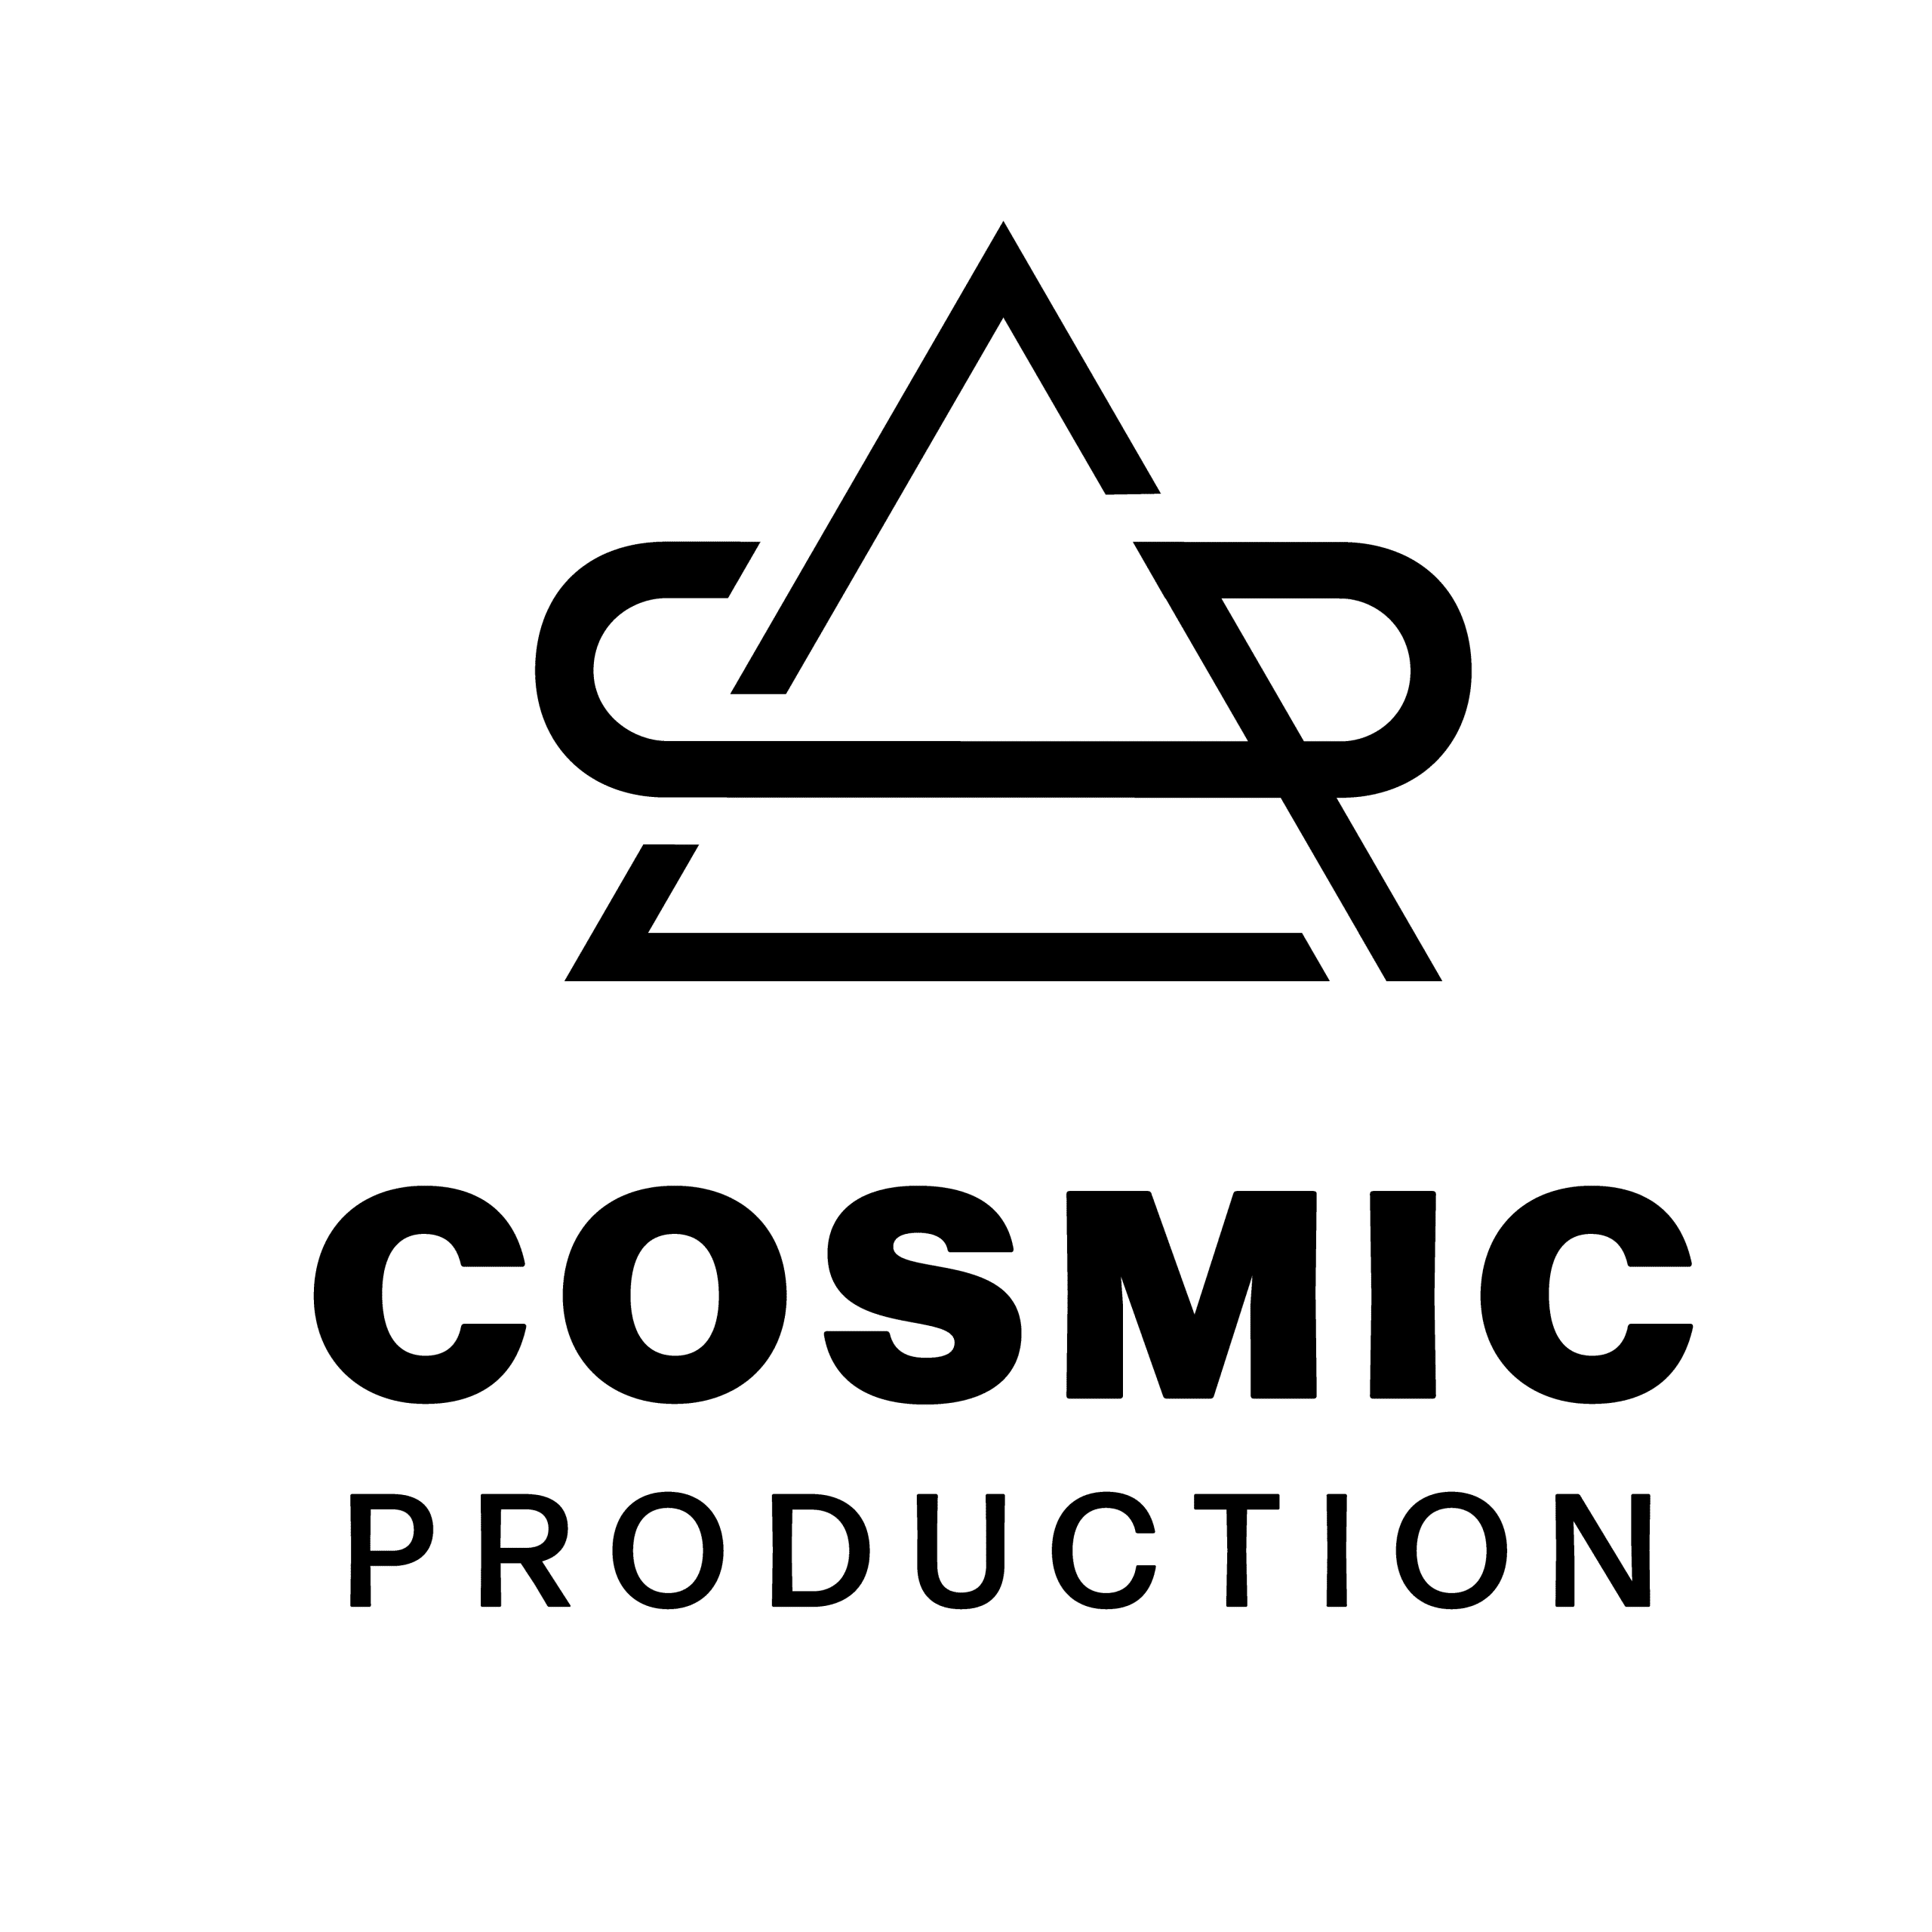 Cosmic Production